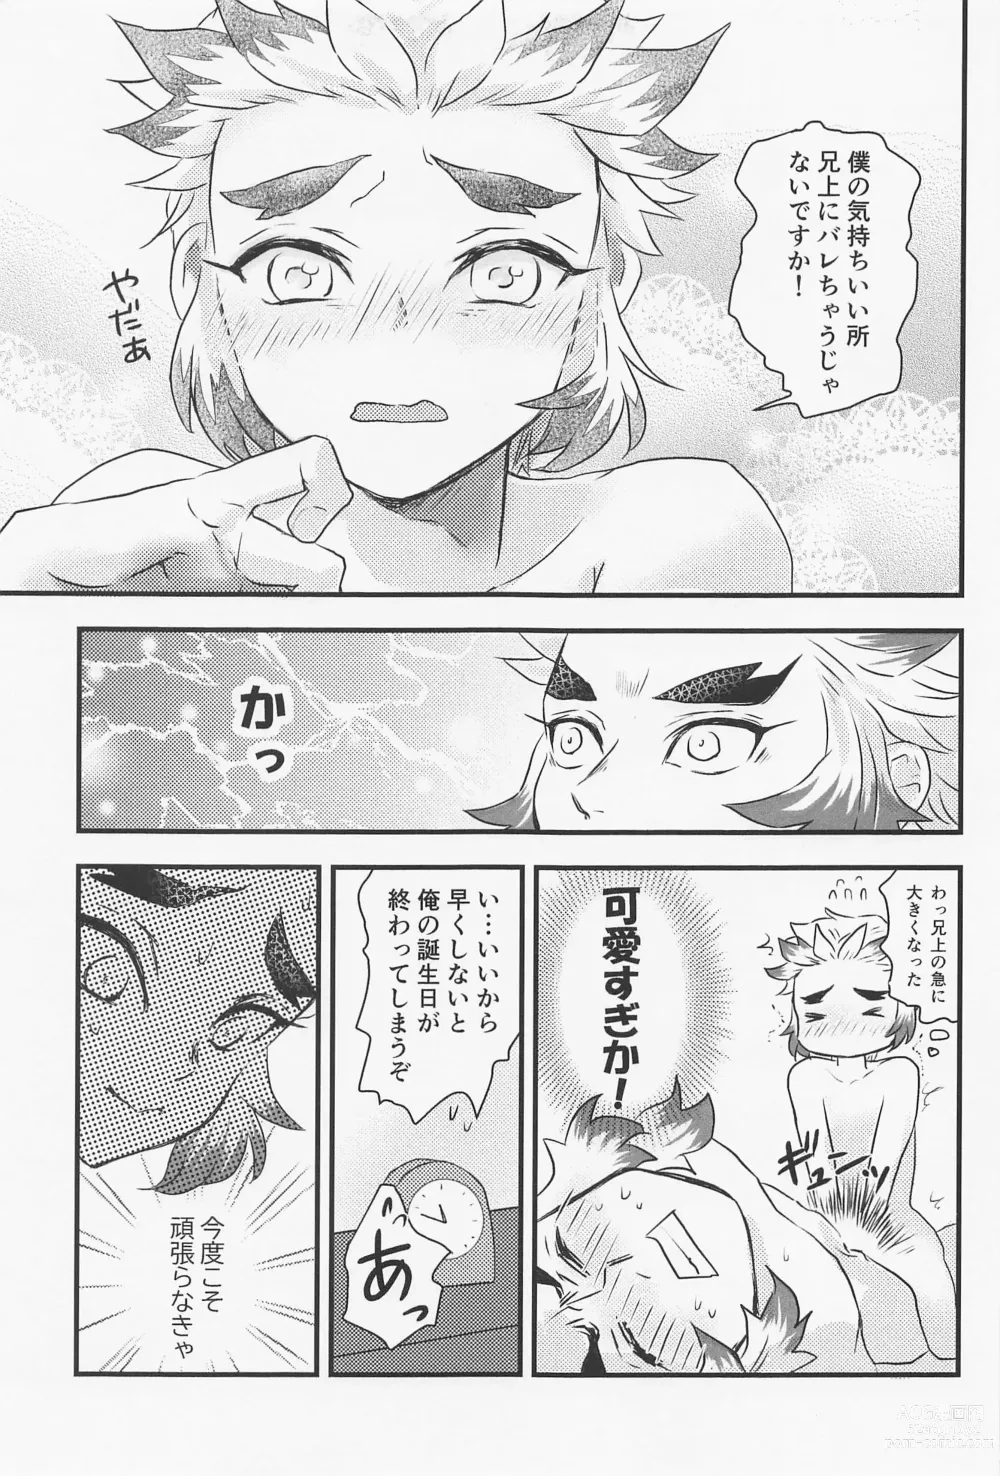 Page 13 of doujinshi GIFT